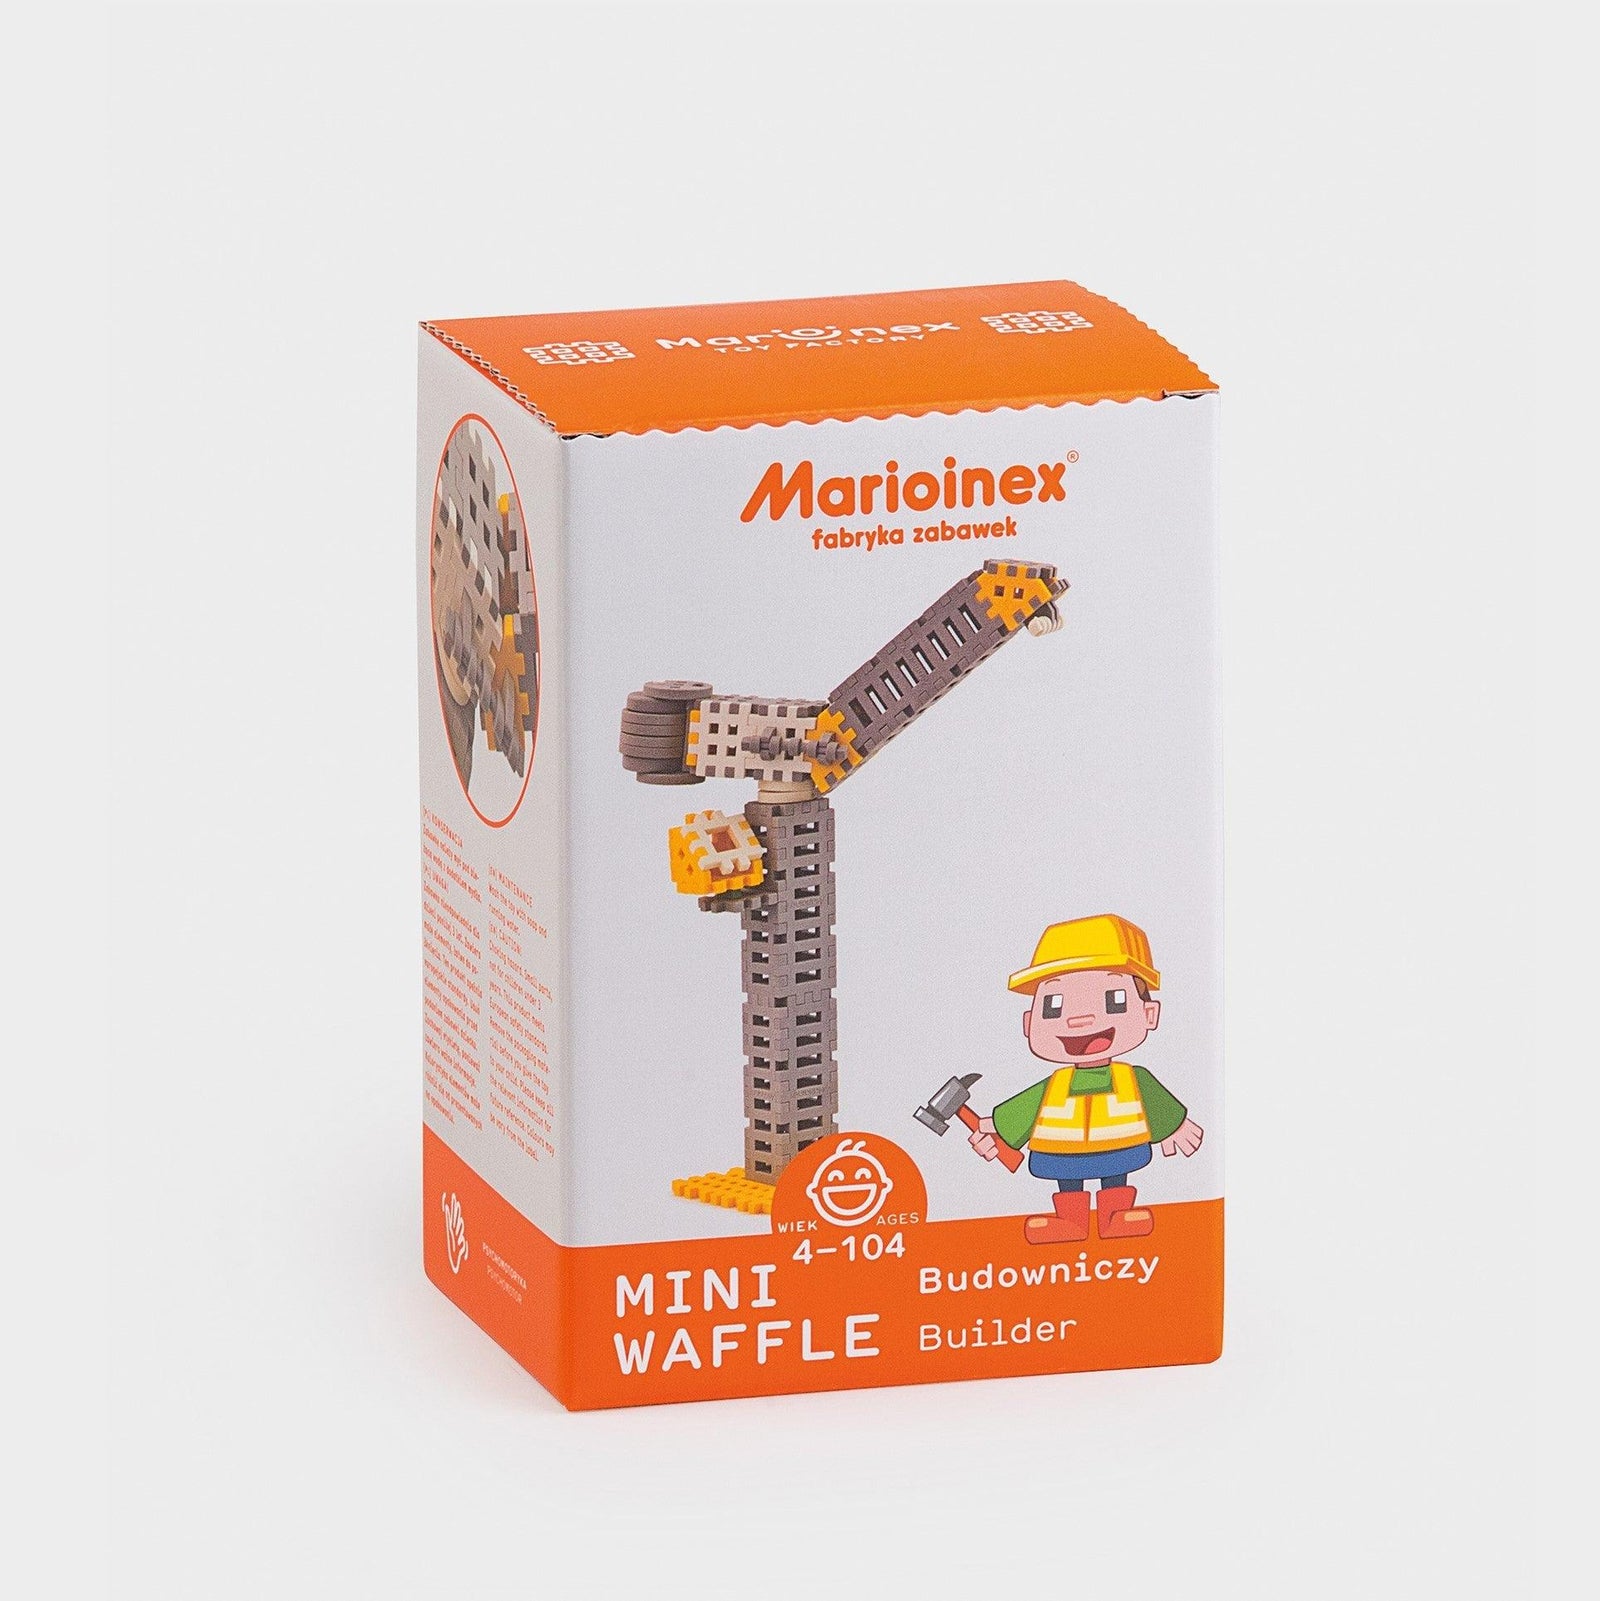 Marioinex: Mini Waffle Builder Medium 59 blocks